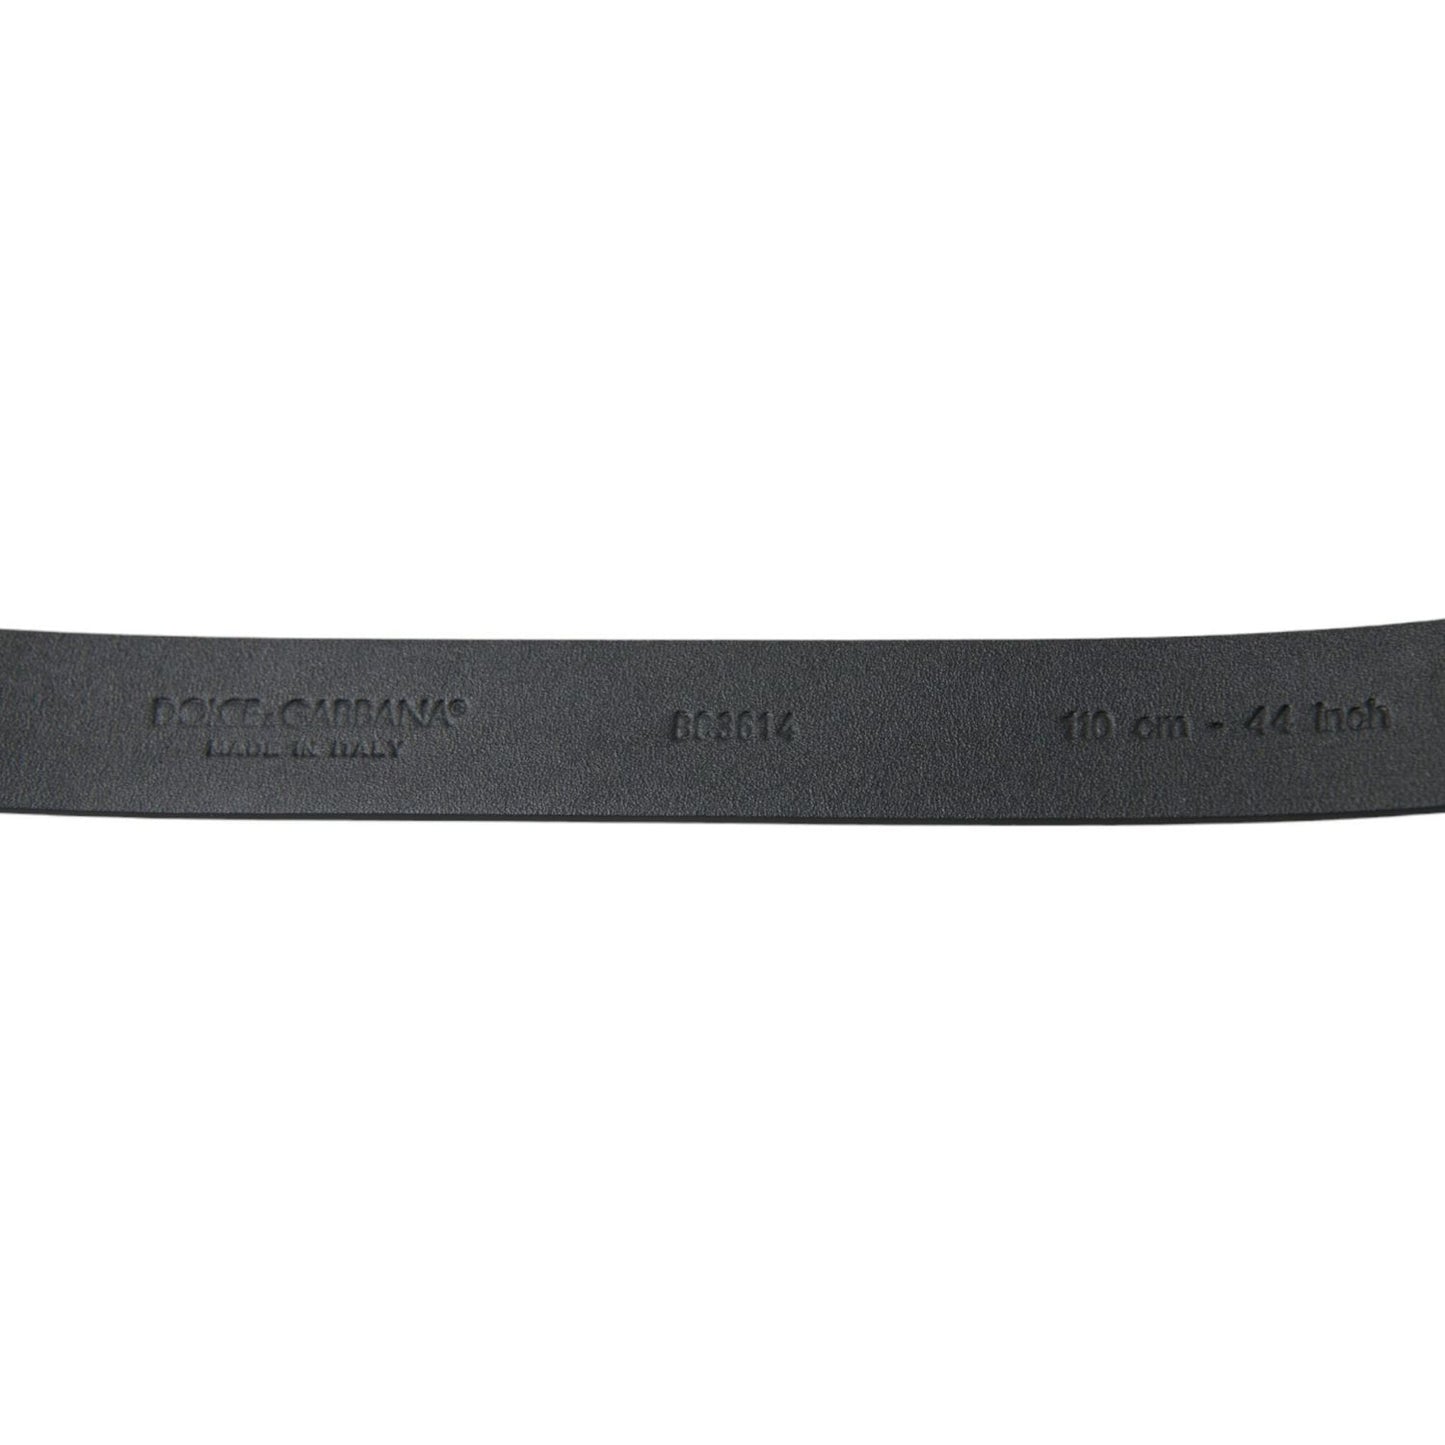 Dolce & Gabbana Elegant Leather Belt with Metal Buckle Closure elegant-leather-belt-with-metal-buckle-closure